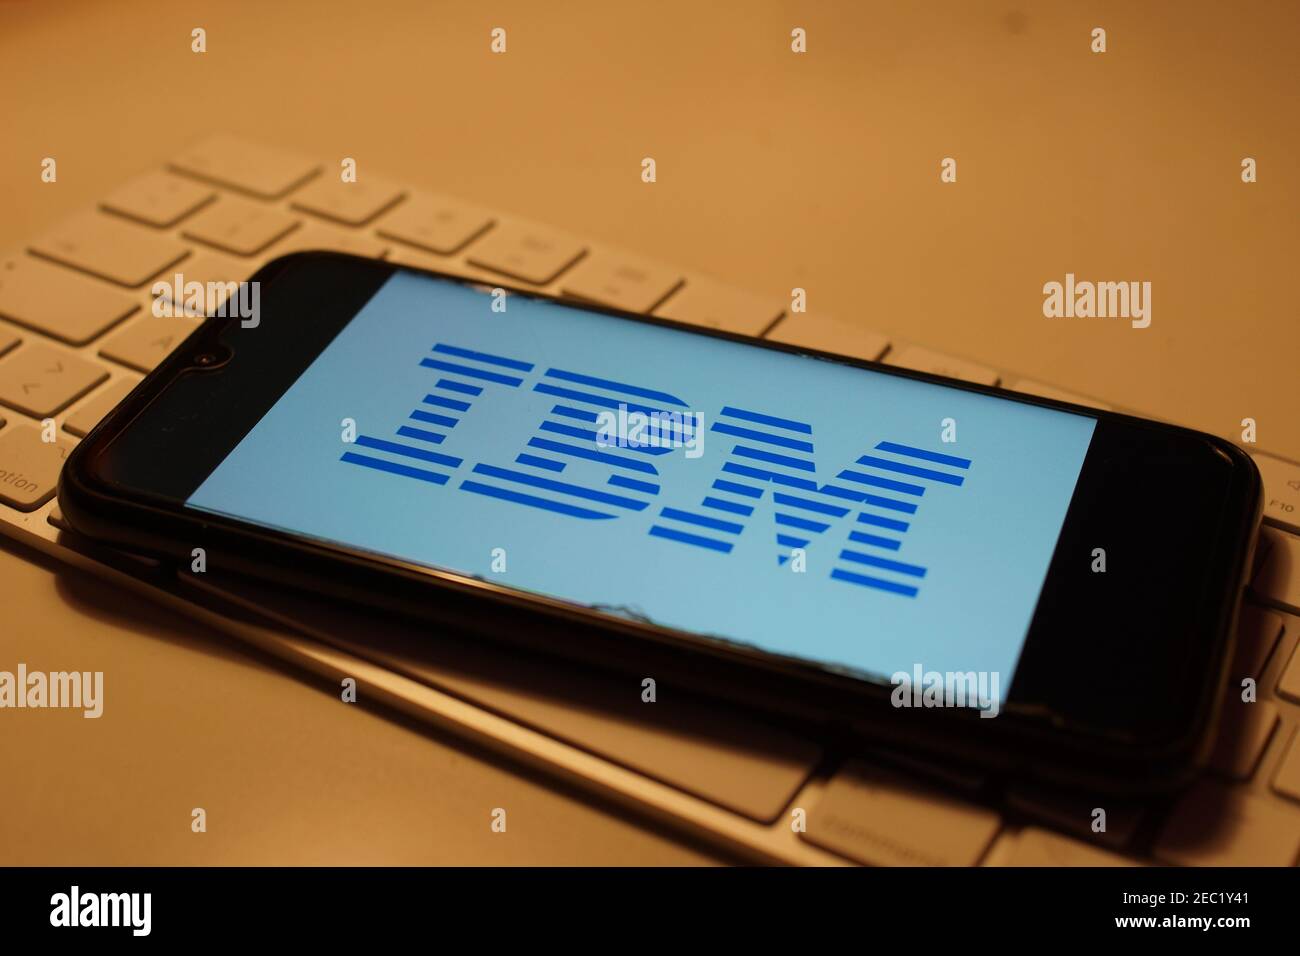 Smartphone with IBM logo on computer keyboard Stock Photo